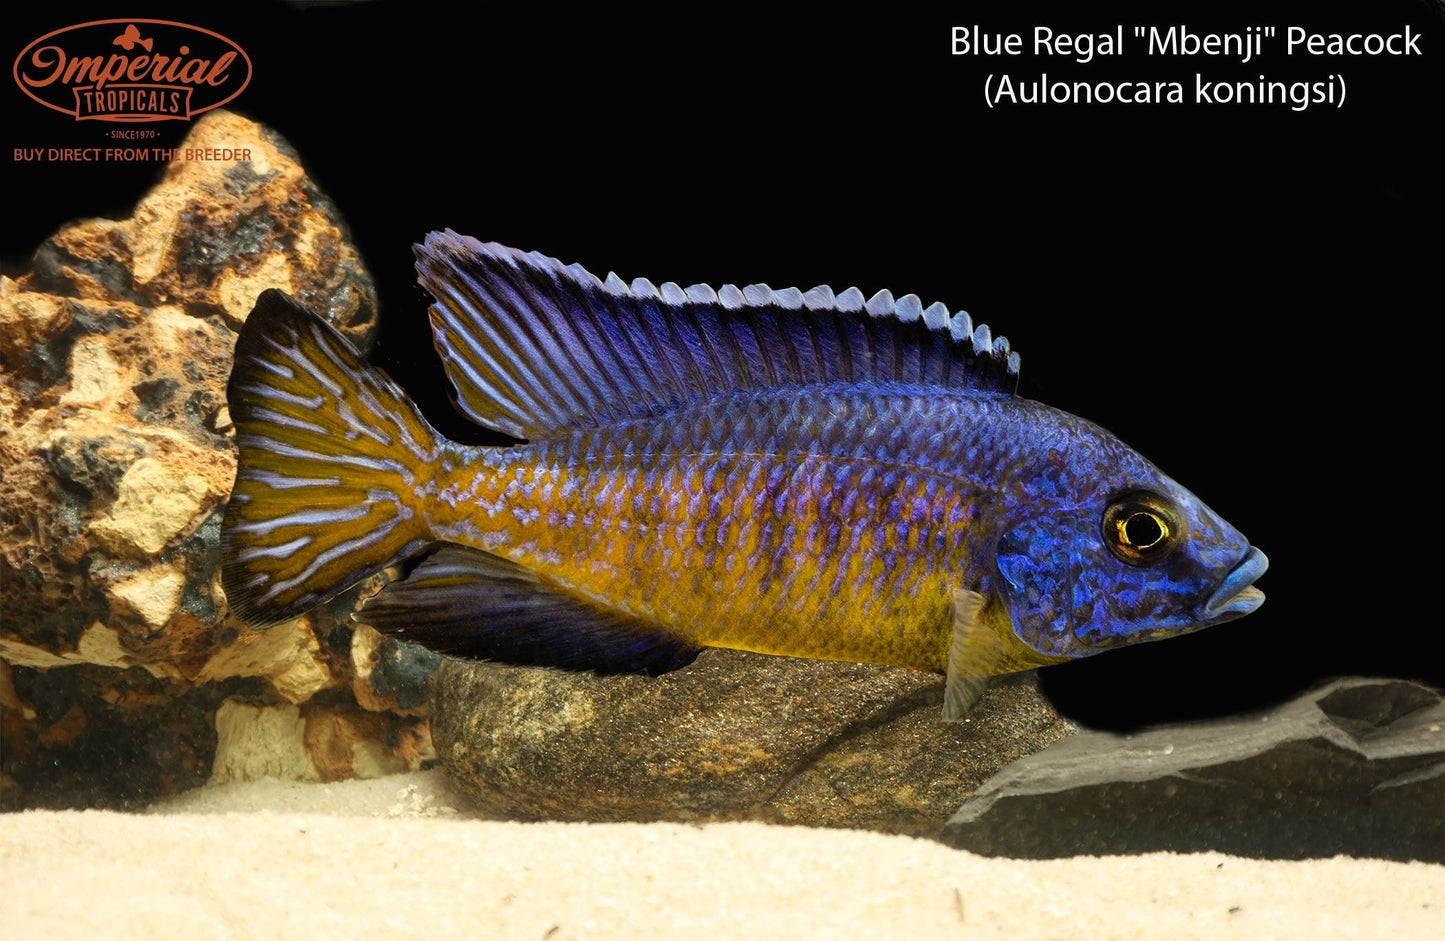 Blue Regal "Mbenji" Peacock